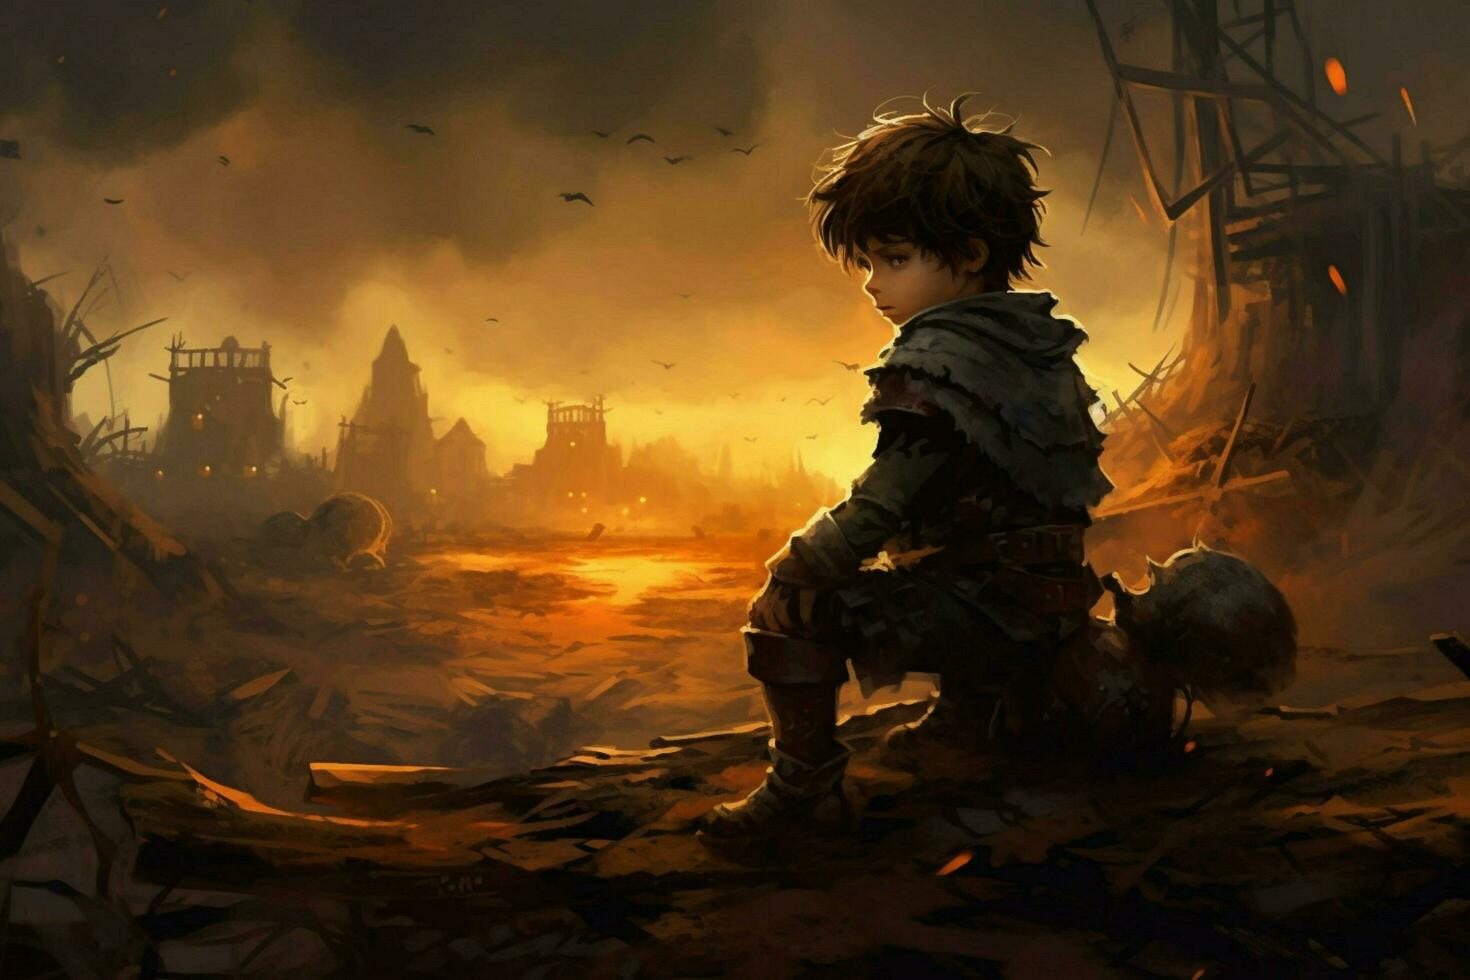 warrior child art gaming fictional world photo